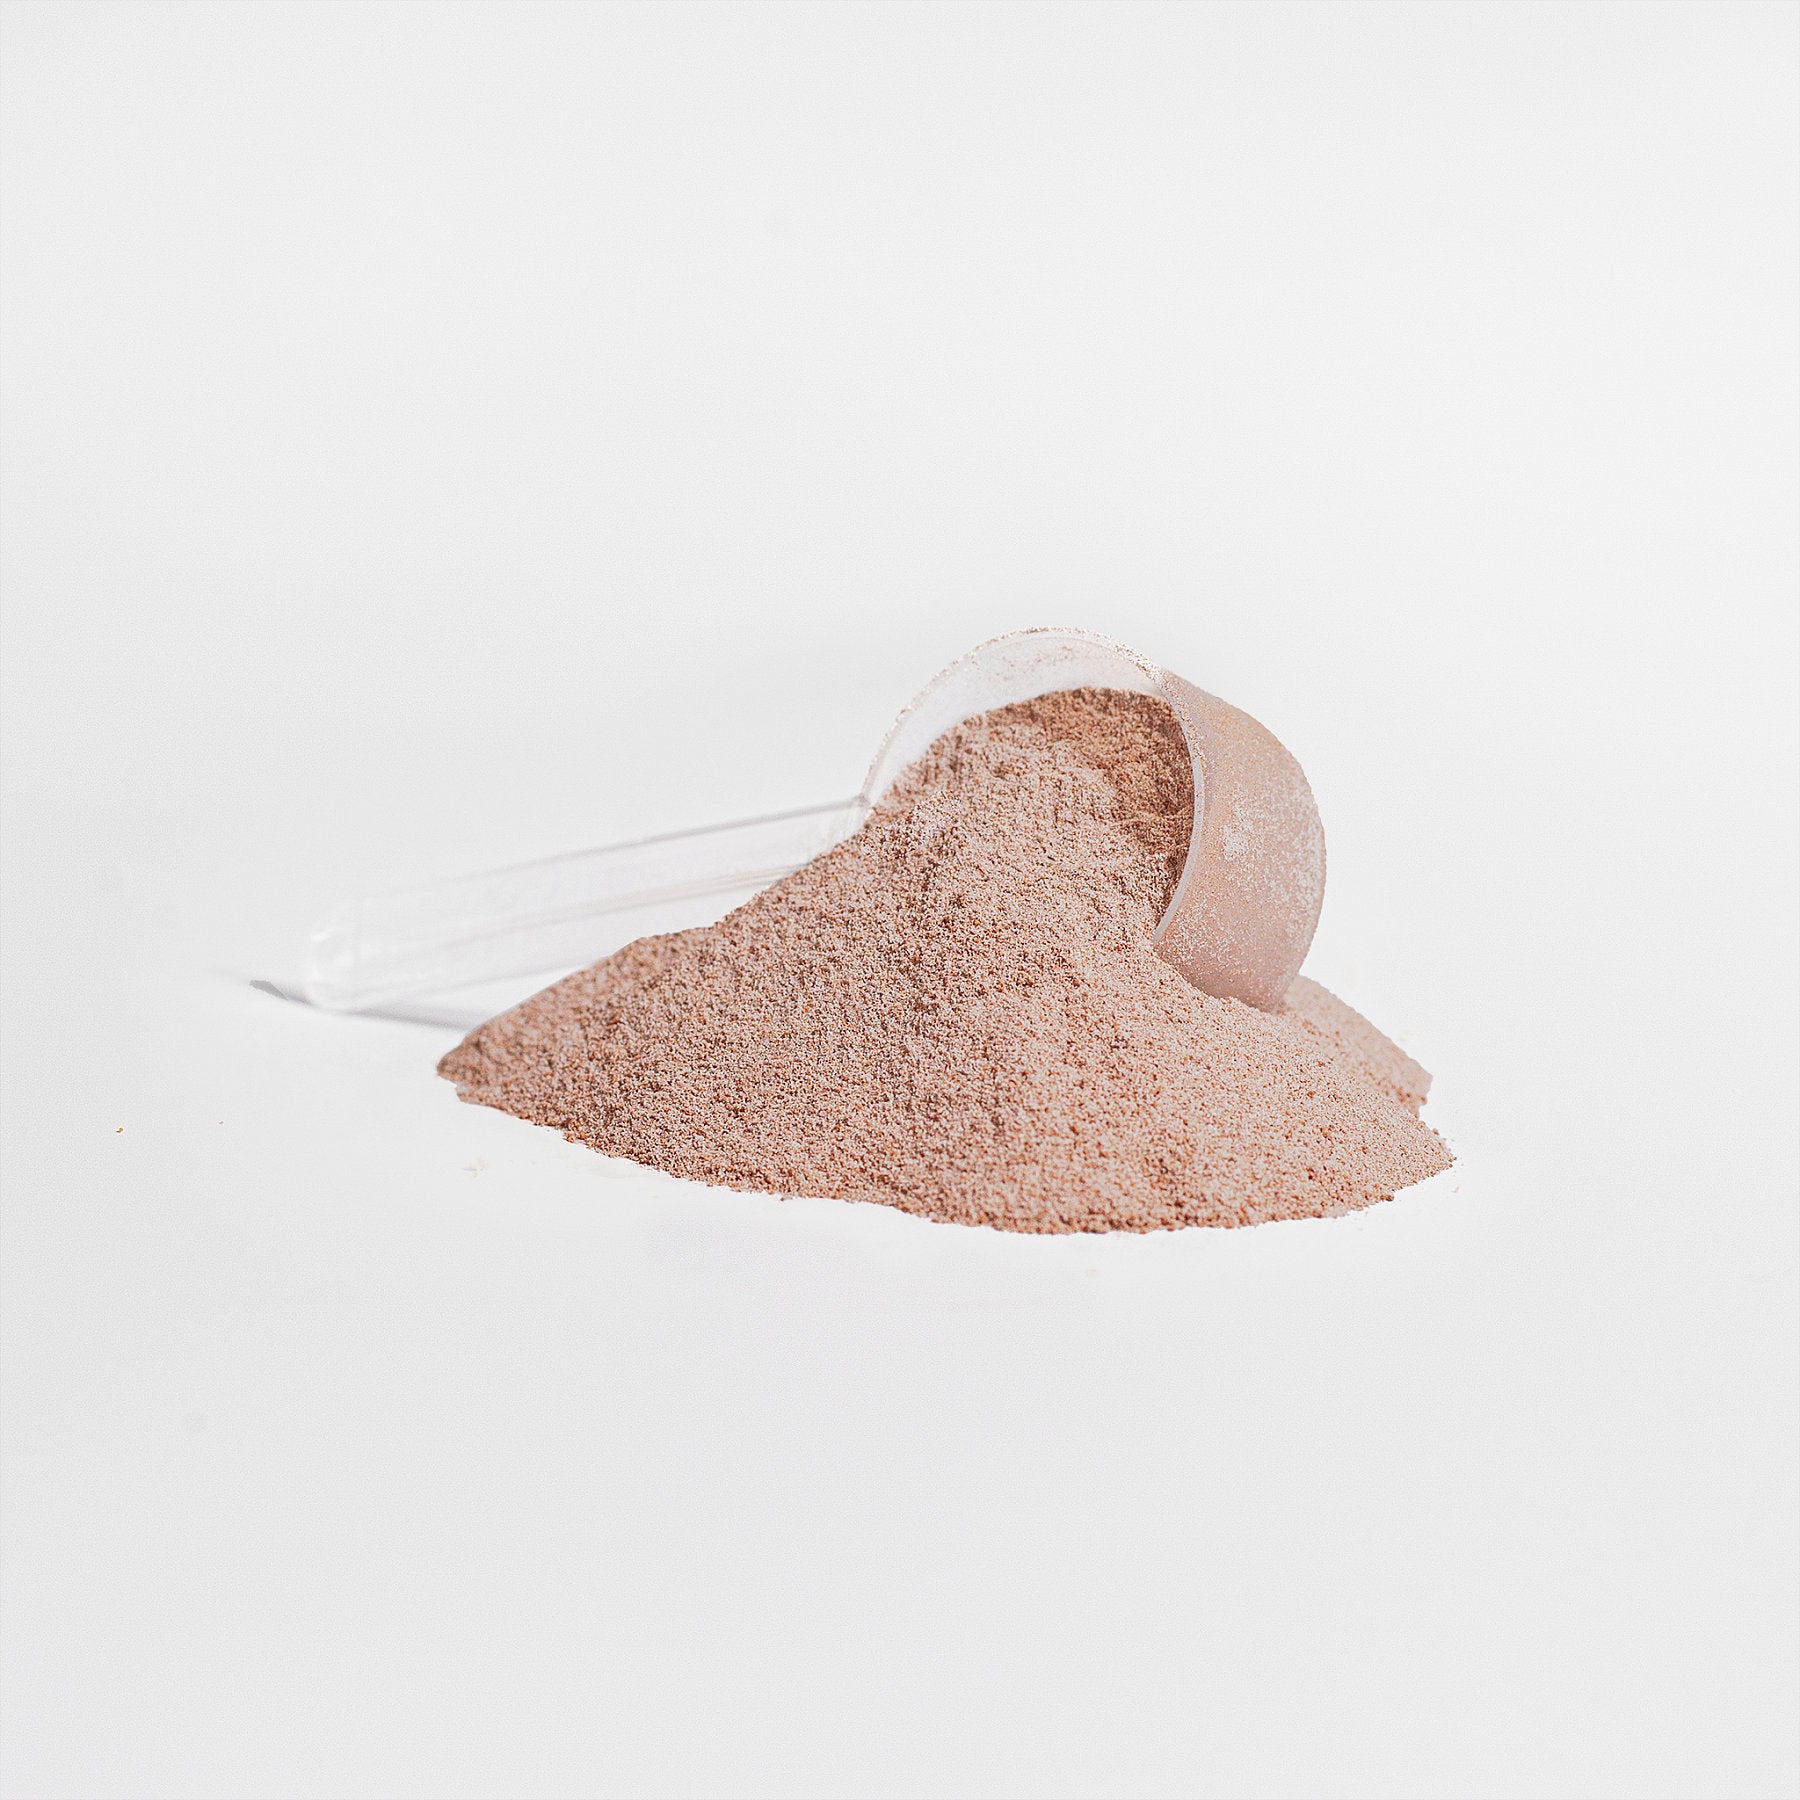 BioGain Grass-Fed Hydrolized Collagen Peptides Powder (Chocolate)